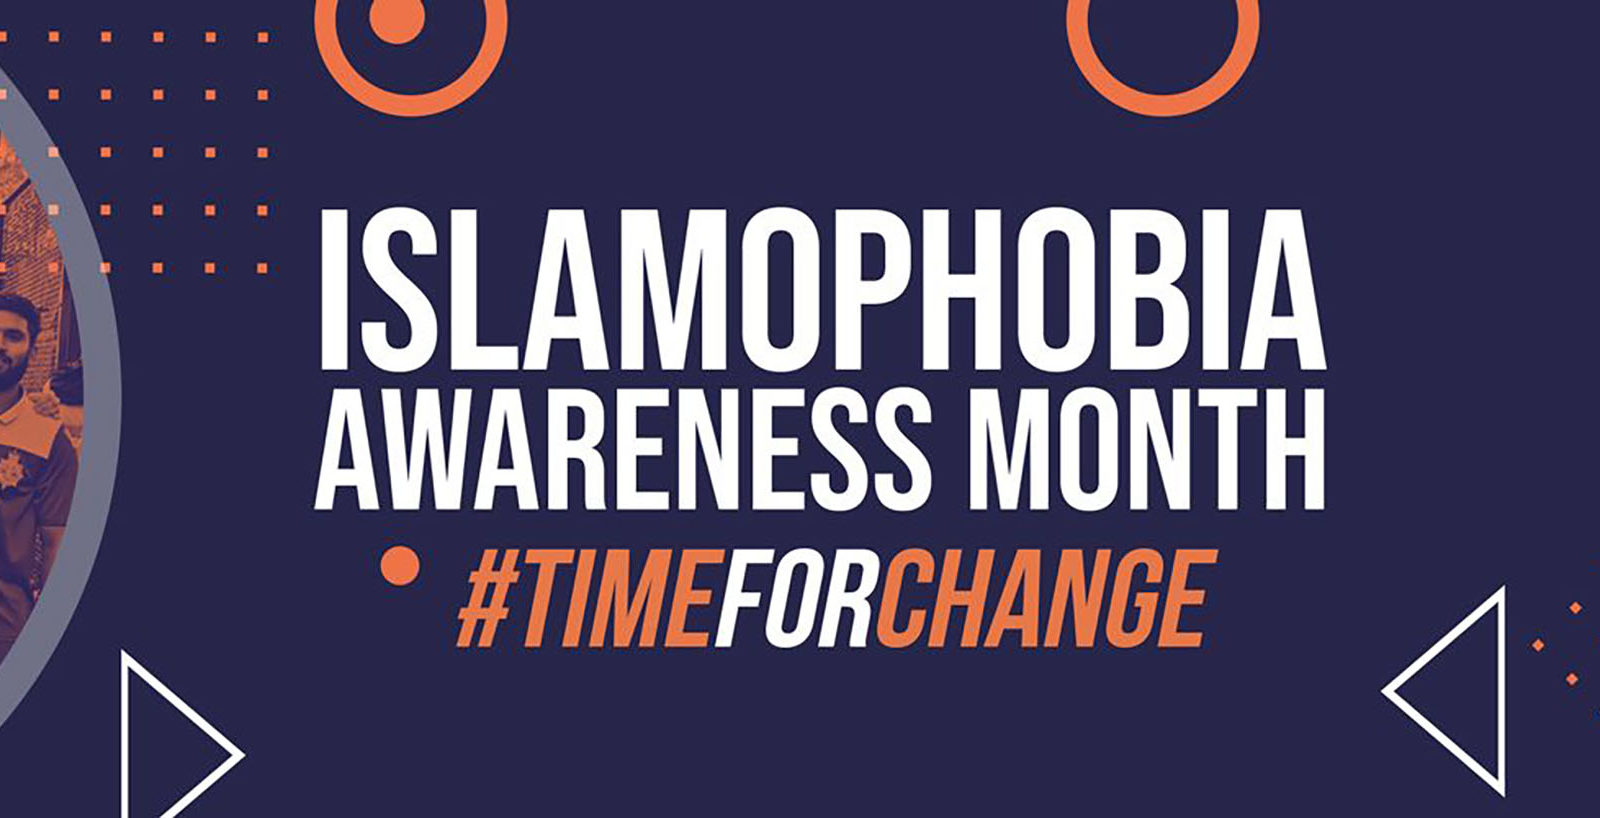 Islamophobia Awareness Month 2021